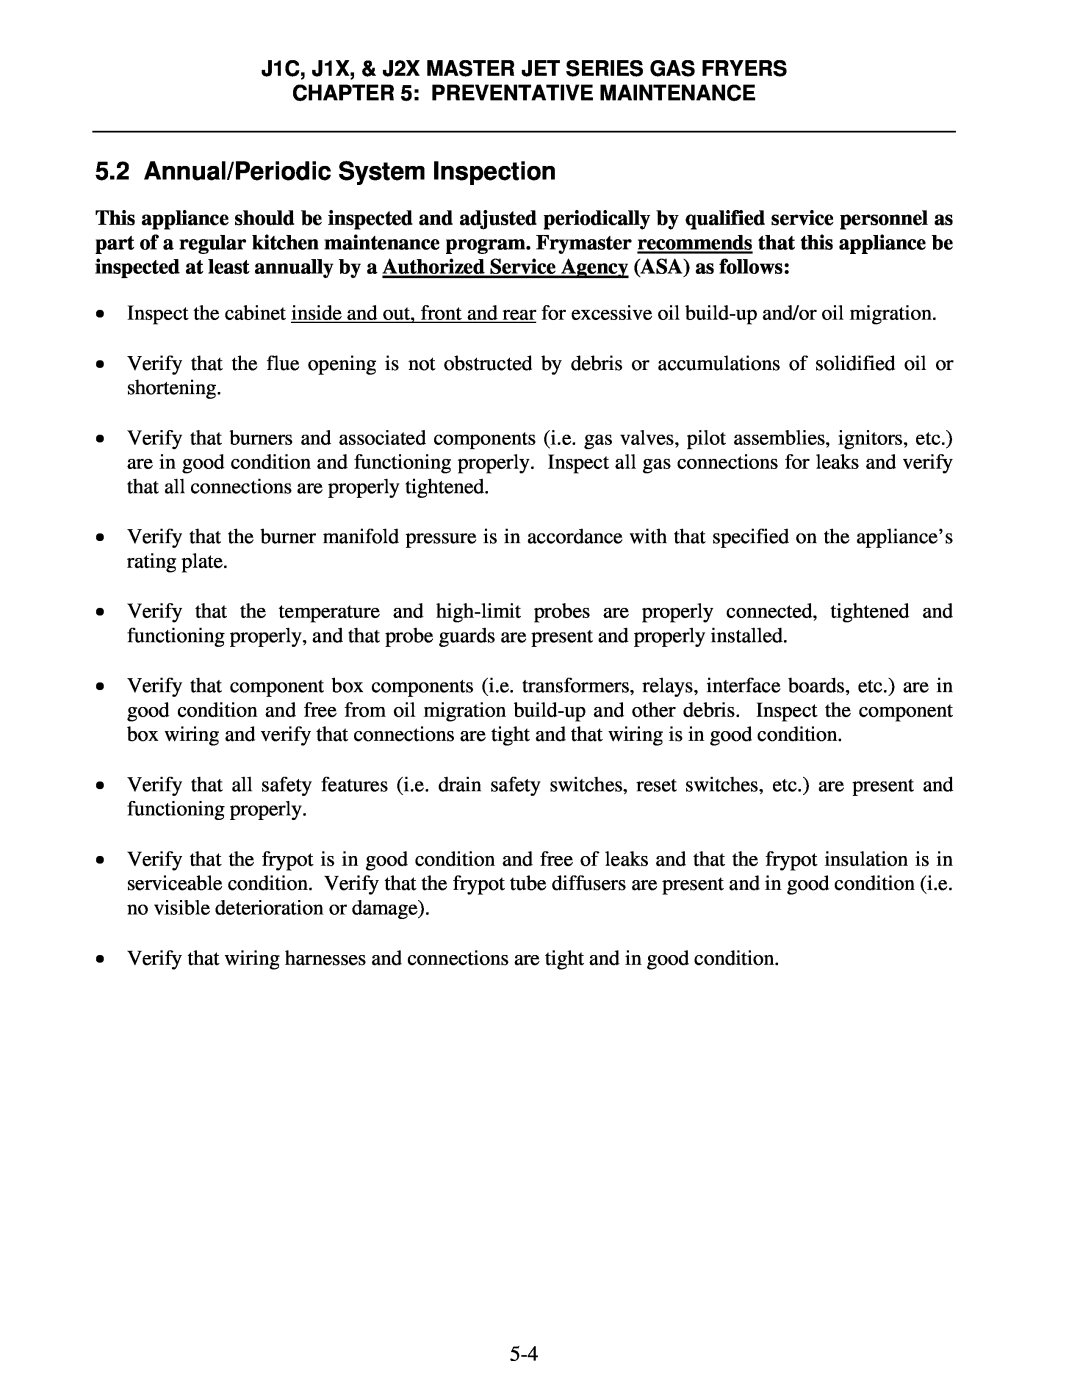 Frymaster Annual/Periodic System Inspection, J1C, J1X, & J2X MASTER JET SERIES GAS FRYERS, Preventative Maintenance 